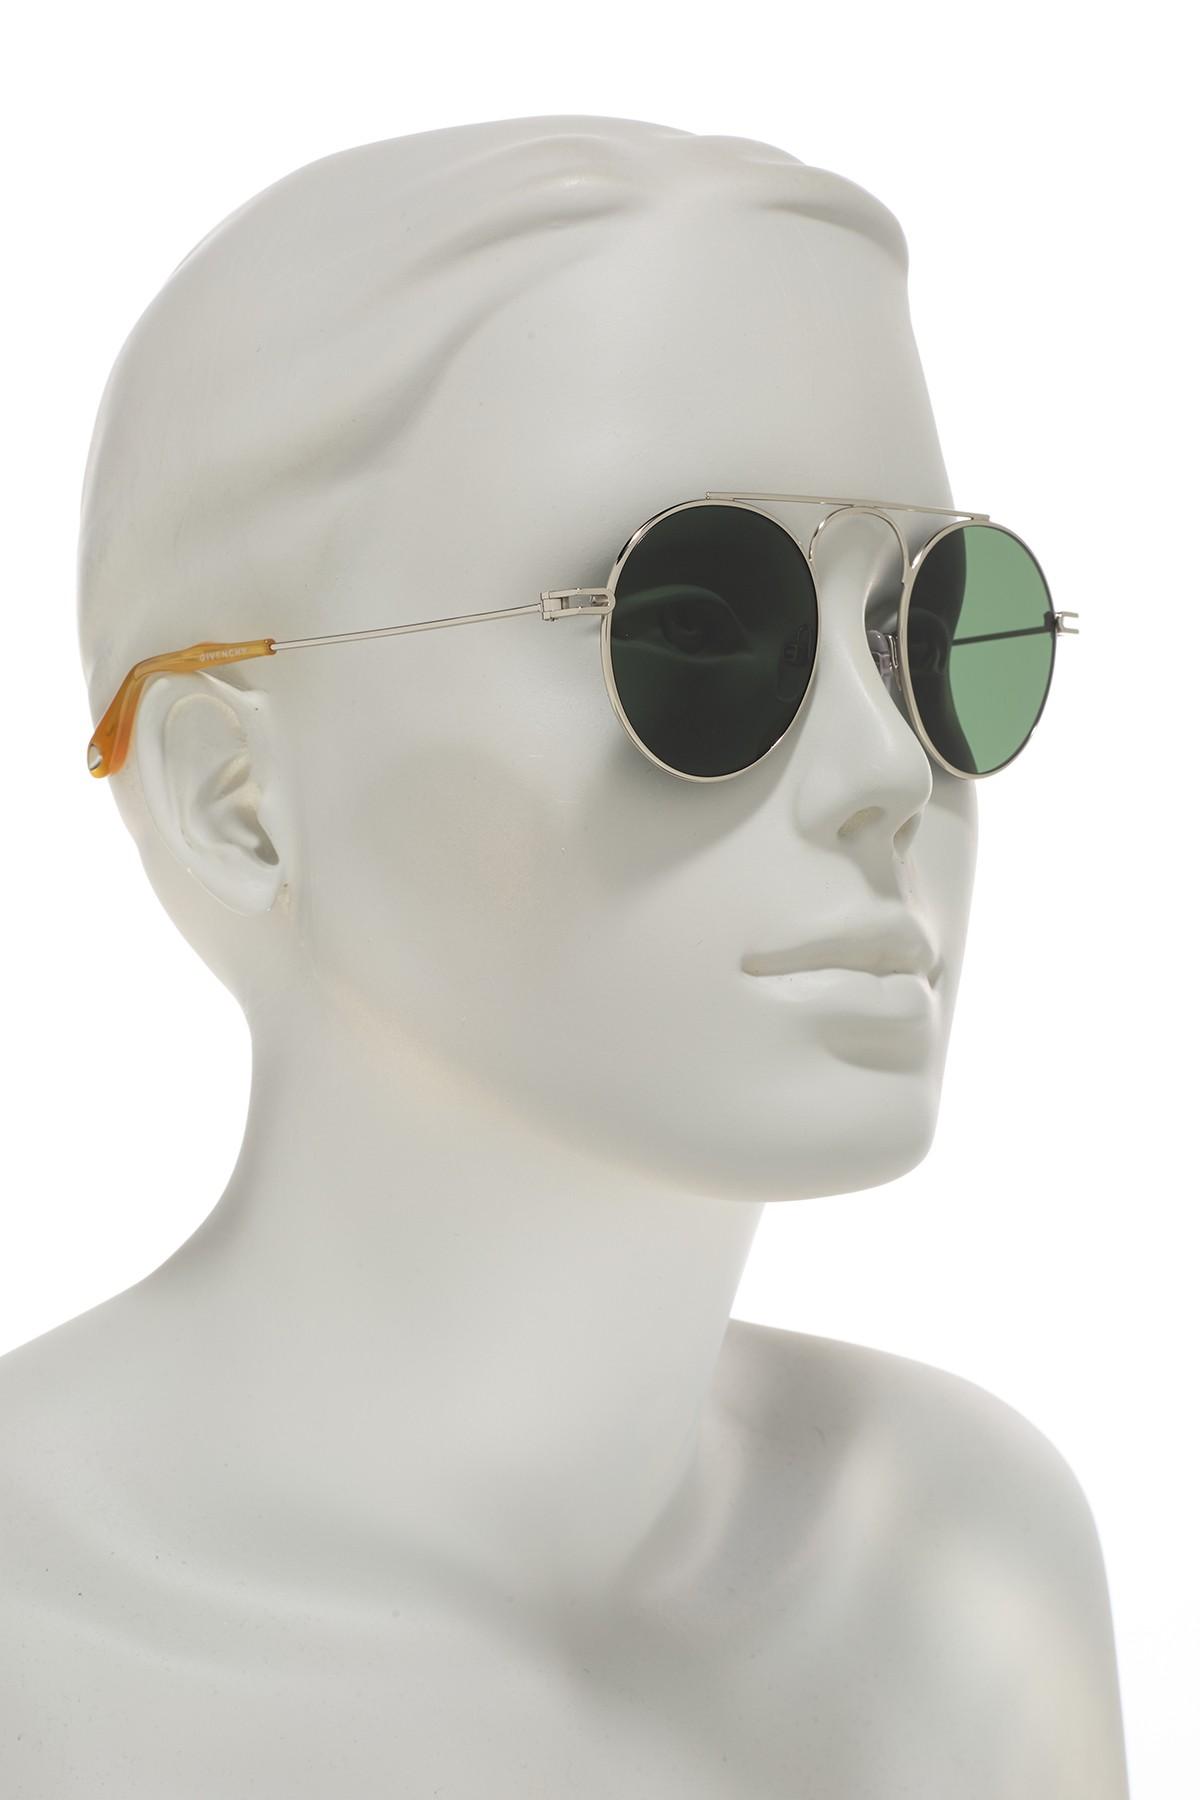 givenchy round aviator sunglasses